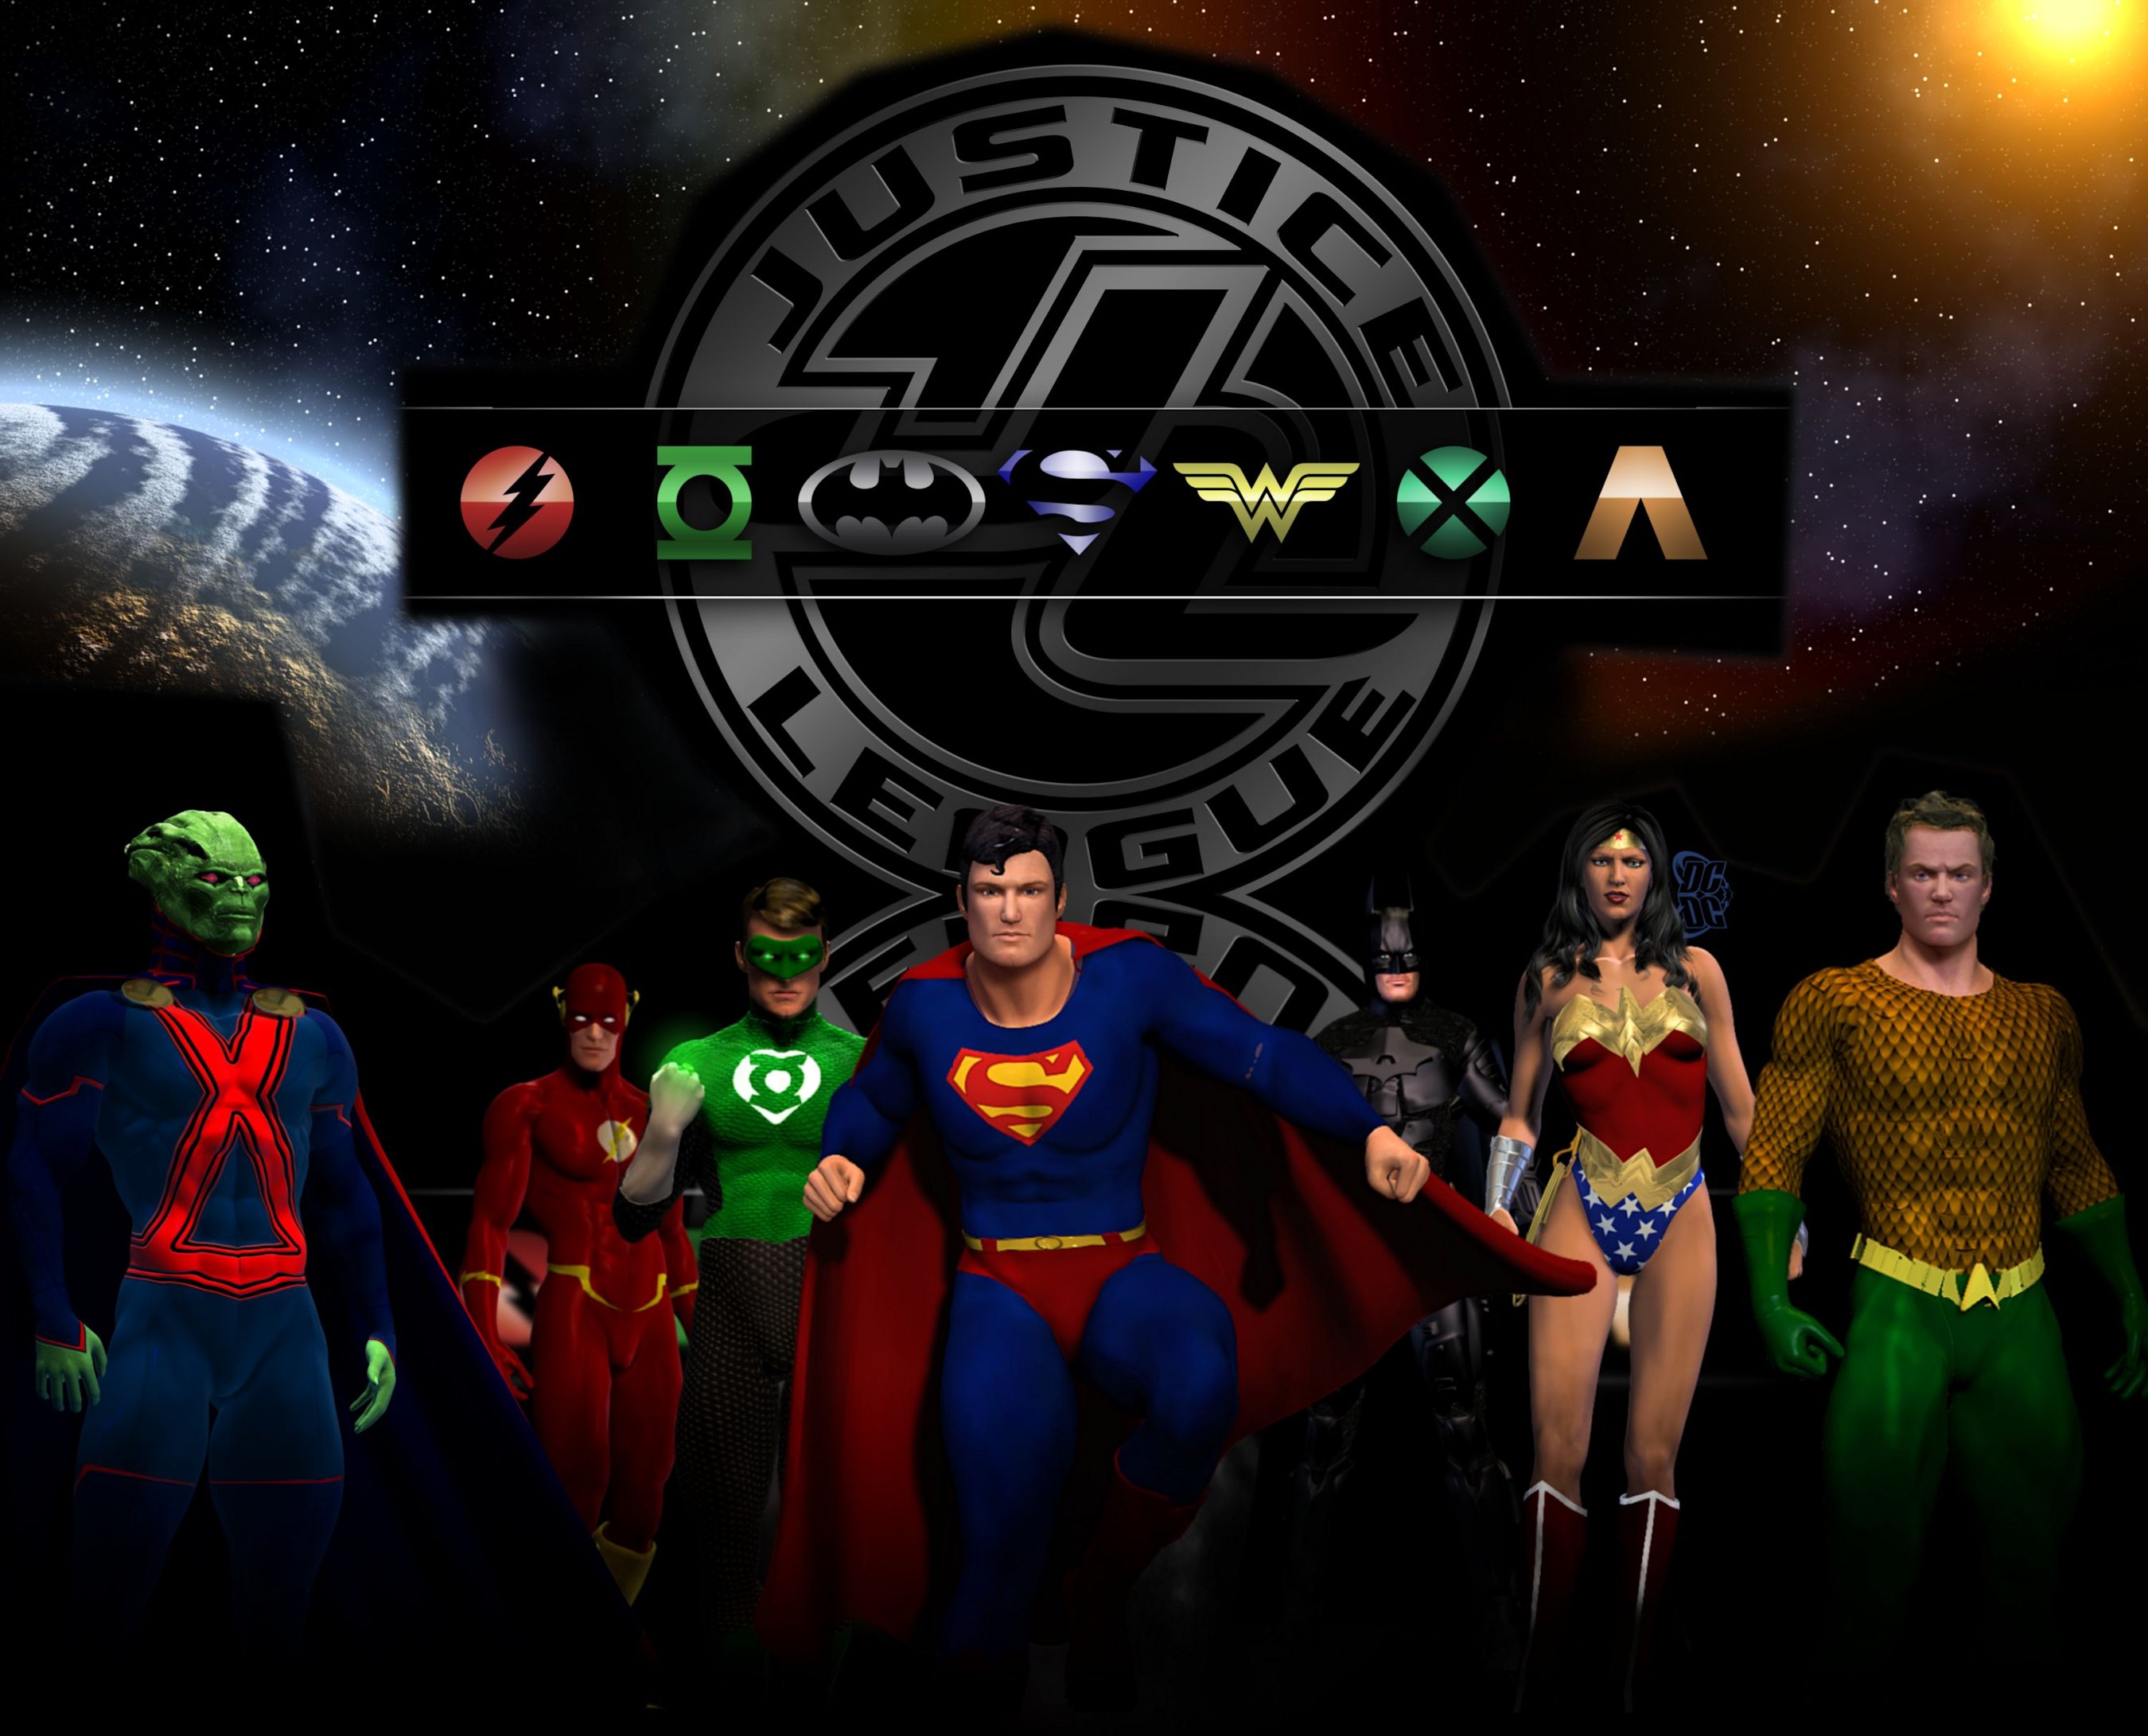 Ics Justice League Dc Superman Martian Manhunter Flash